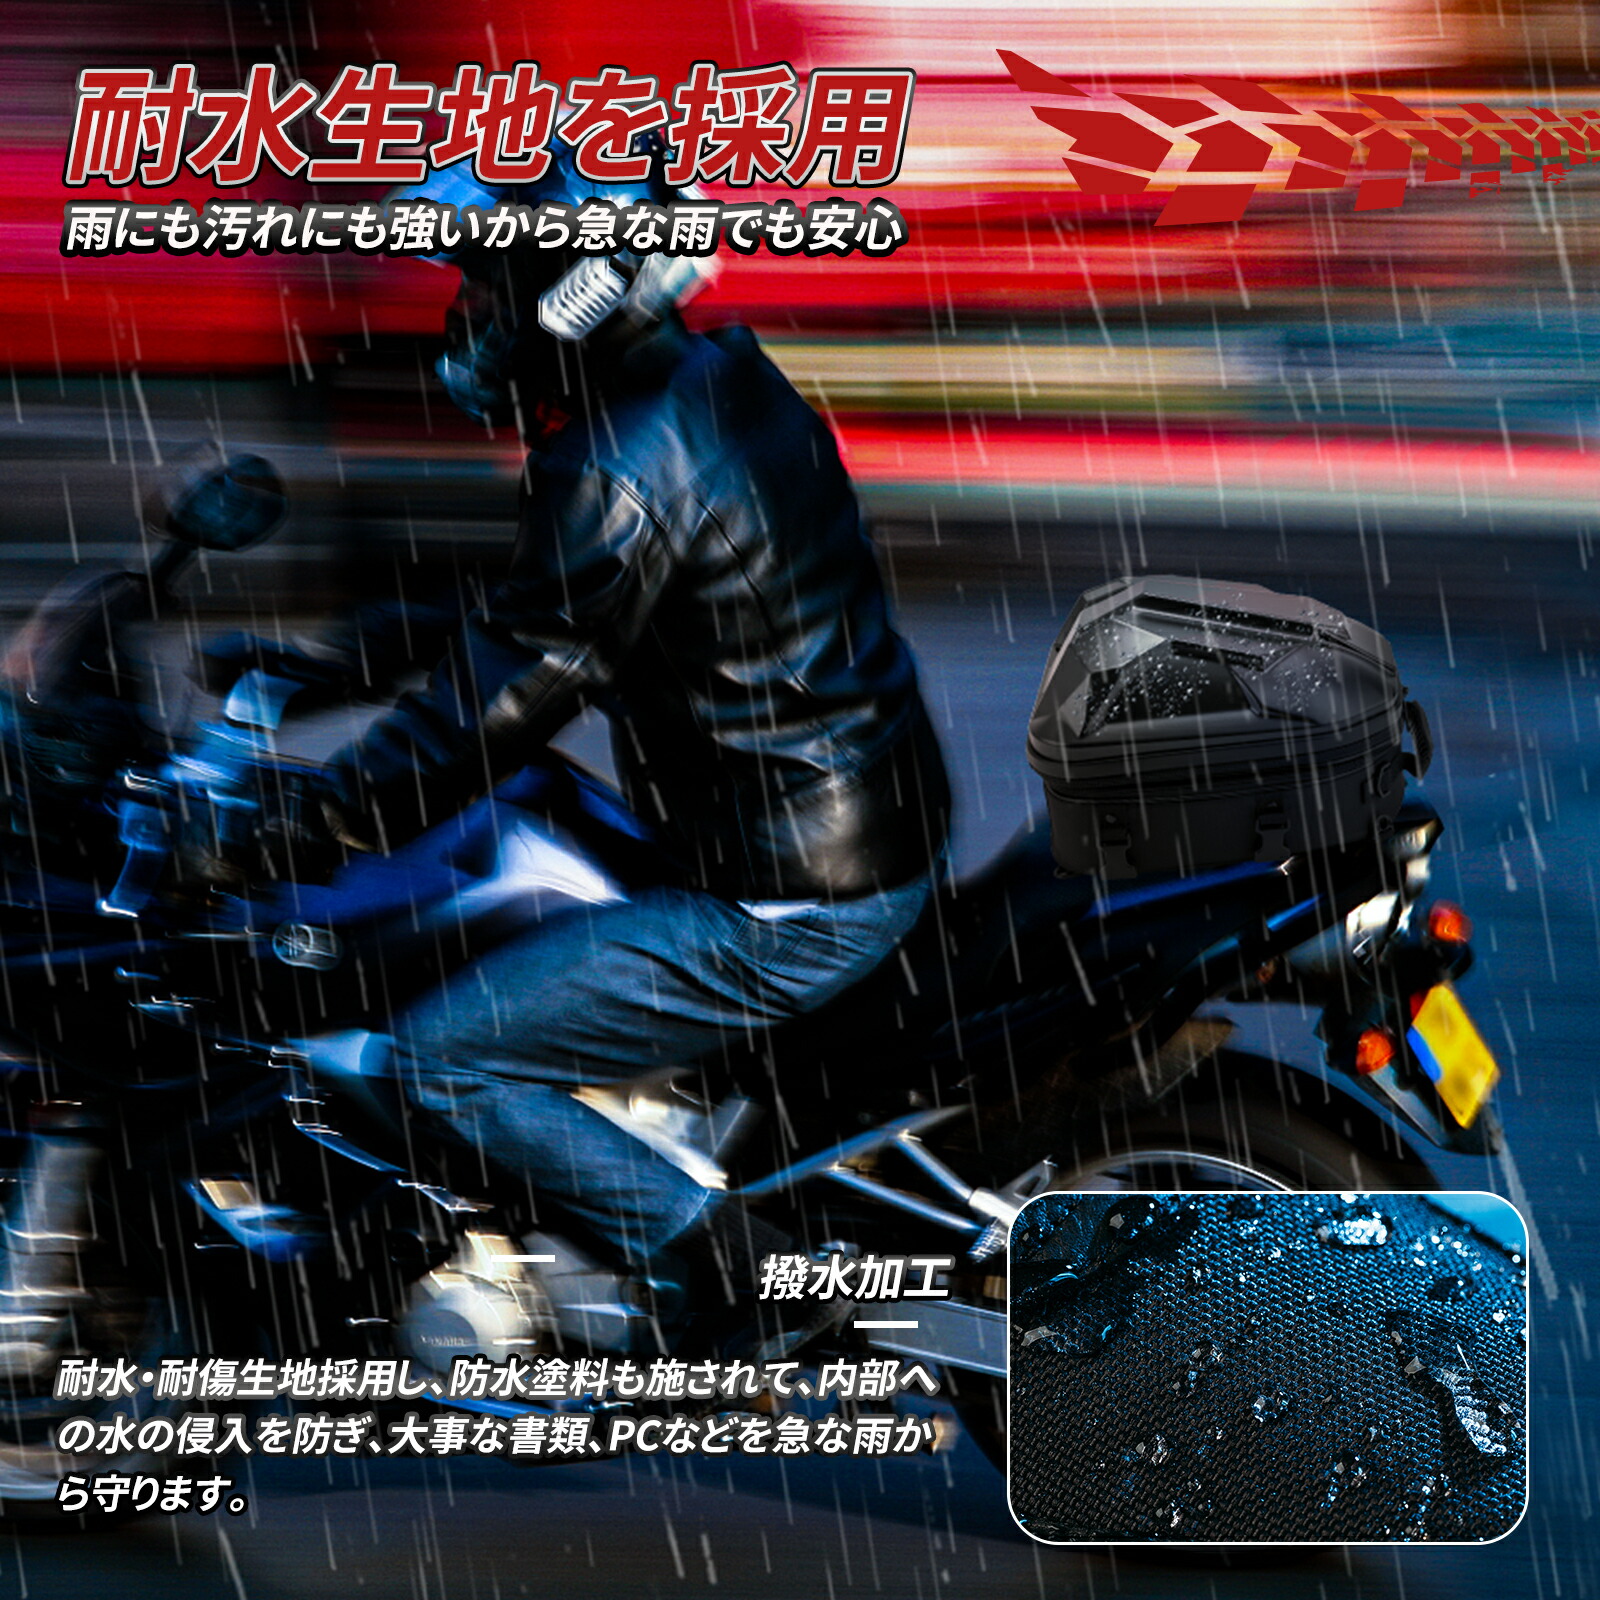 GINGER掲載商品】バイク用 シートバッグ 15-20L大容量 耐傷 耐久性